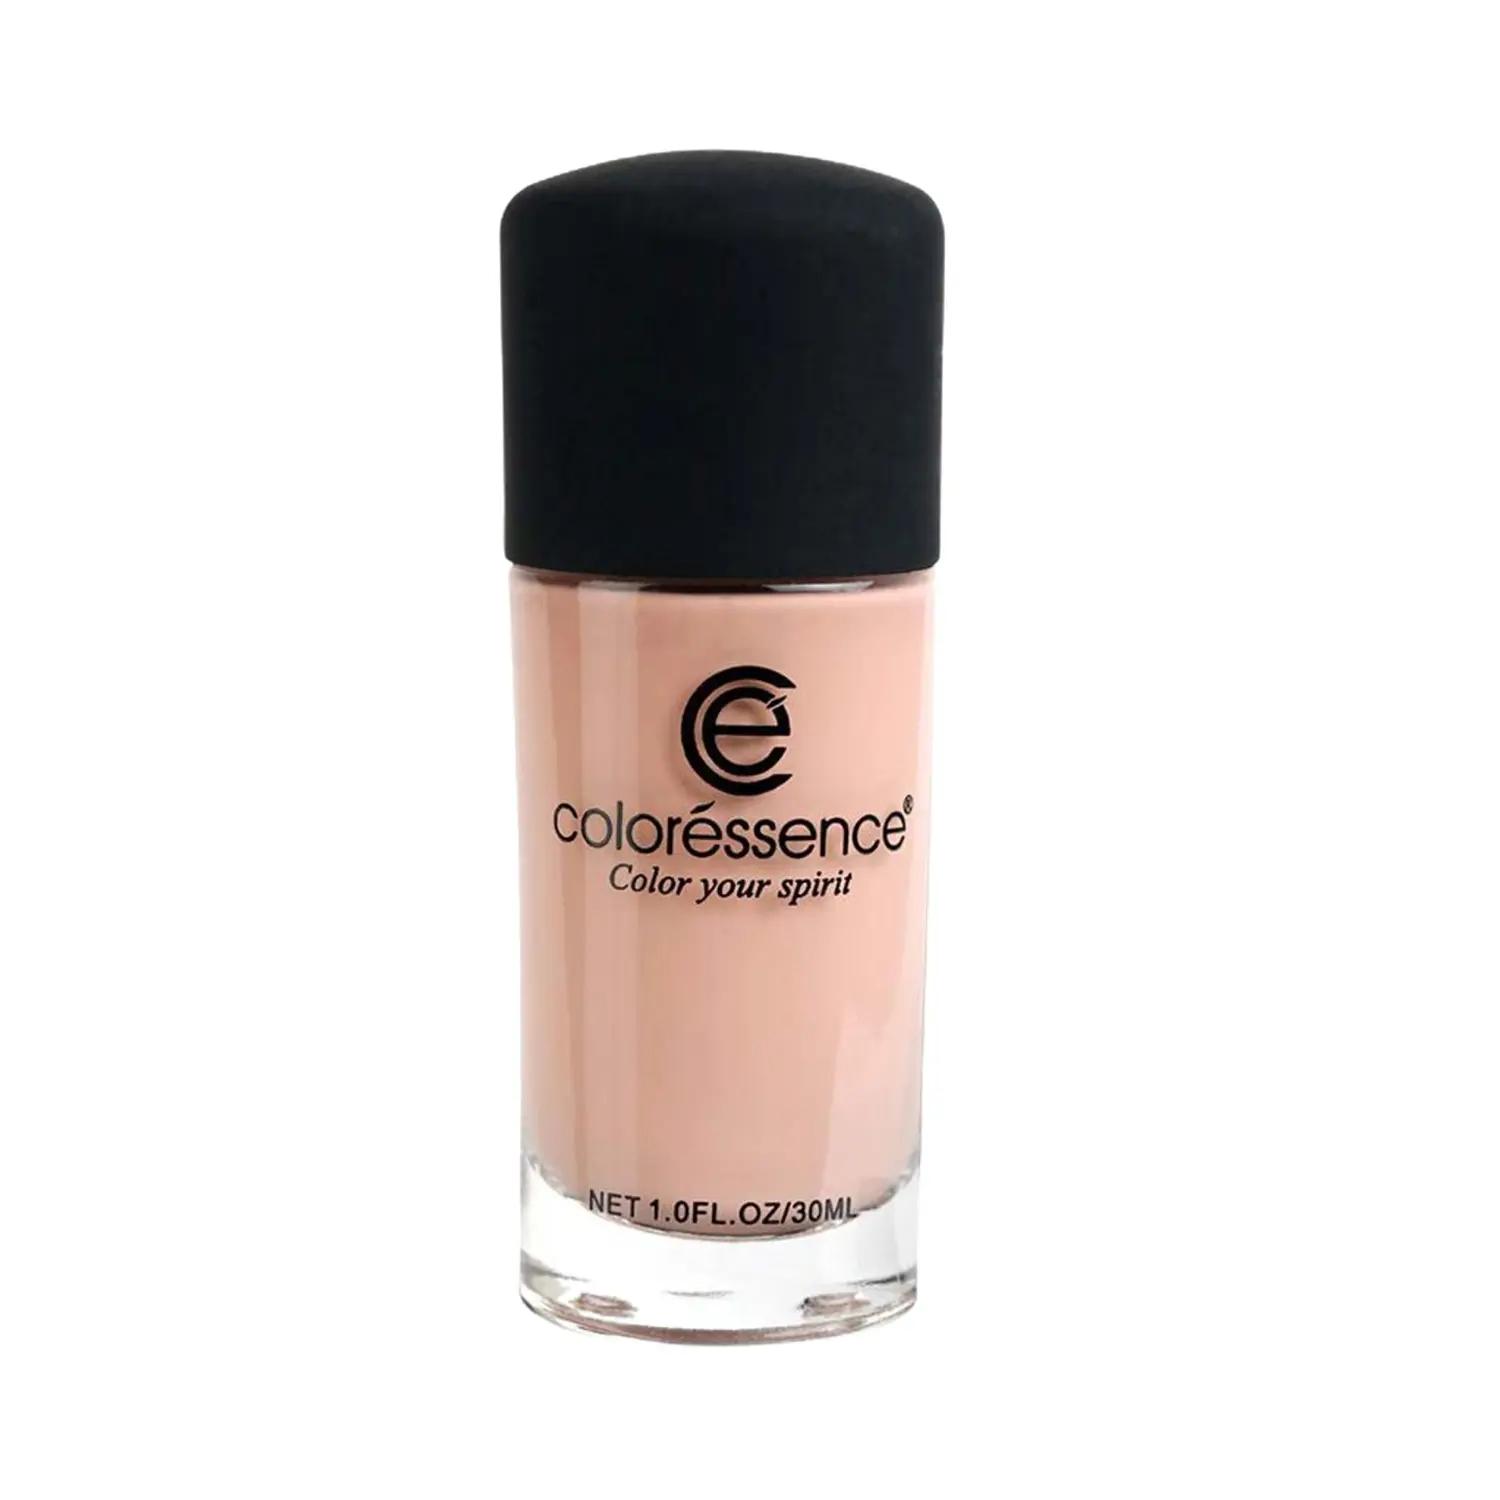 coloressence liquid foundation, deep coverage lightweight formula - pink beige (30ml)